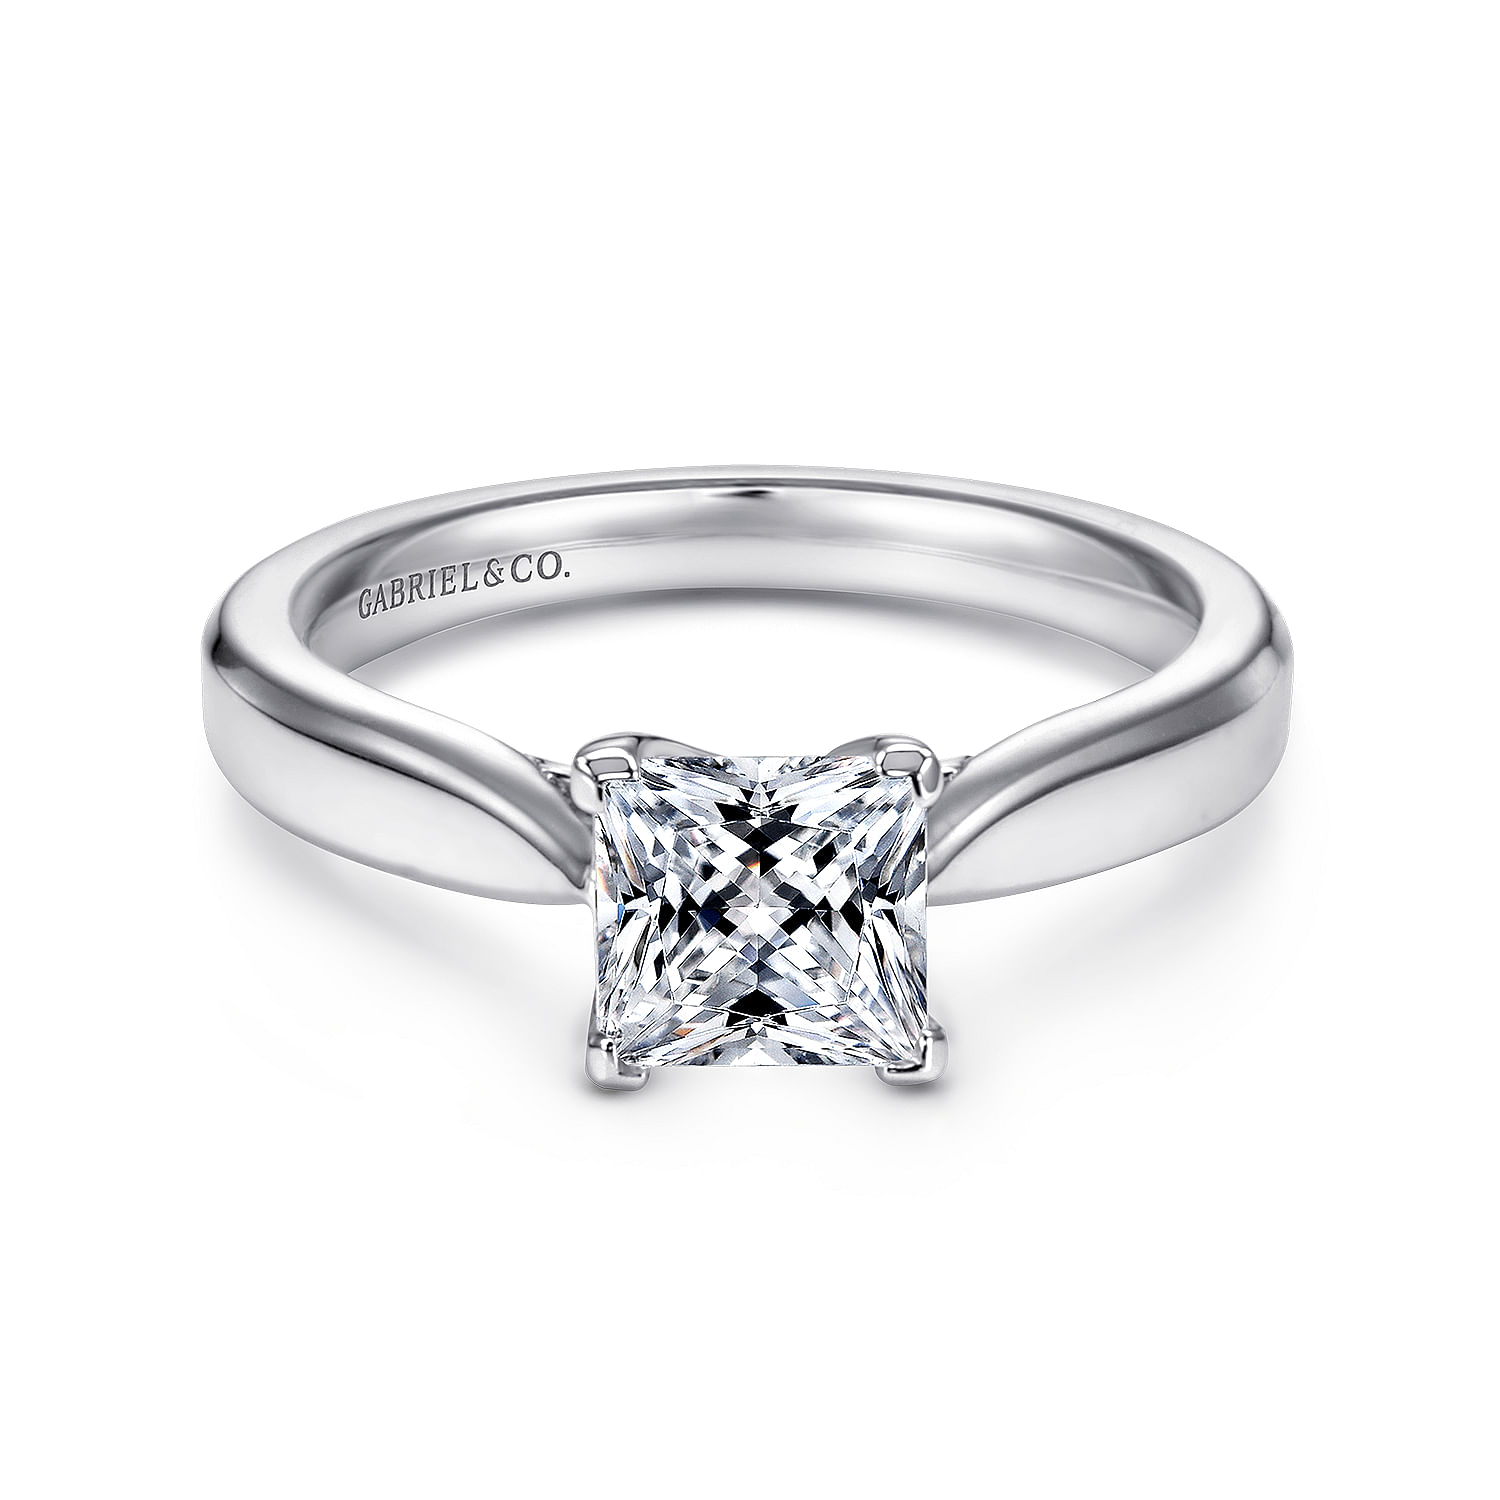 Jamie---14K-White-Gold-Princess-Cut-Diamond-Engagement-Ring1